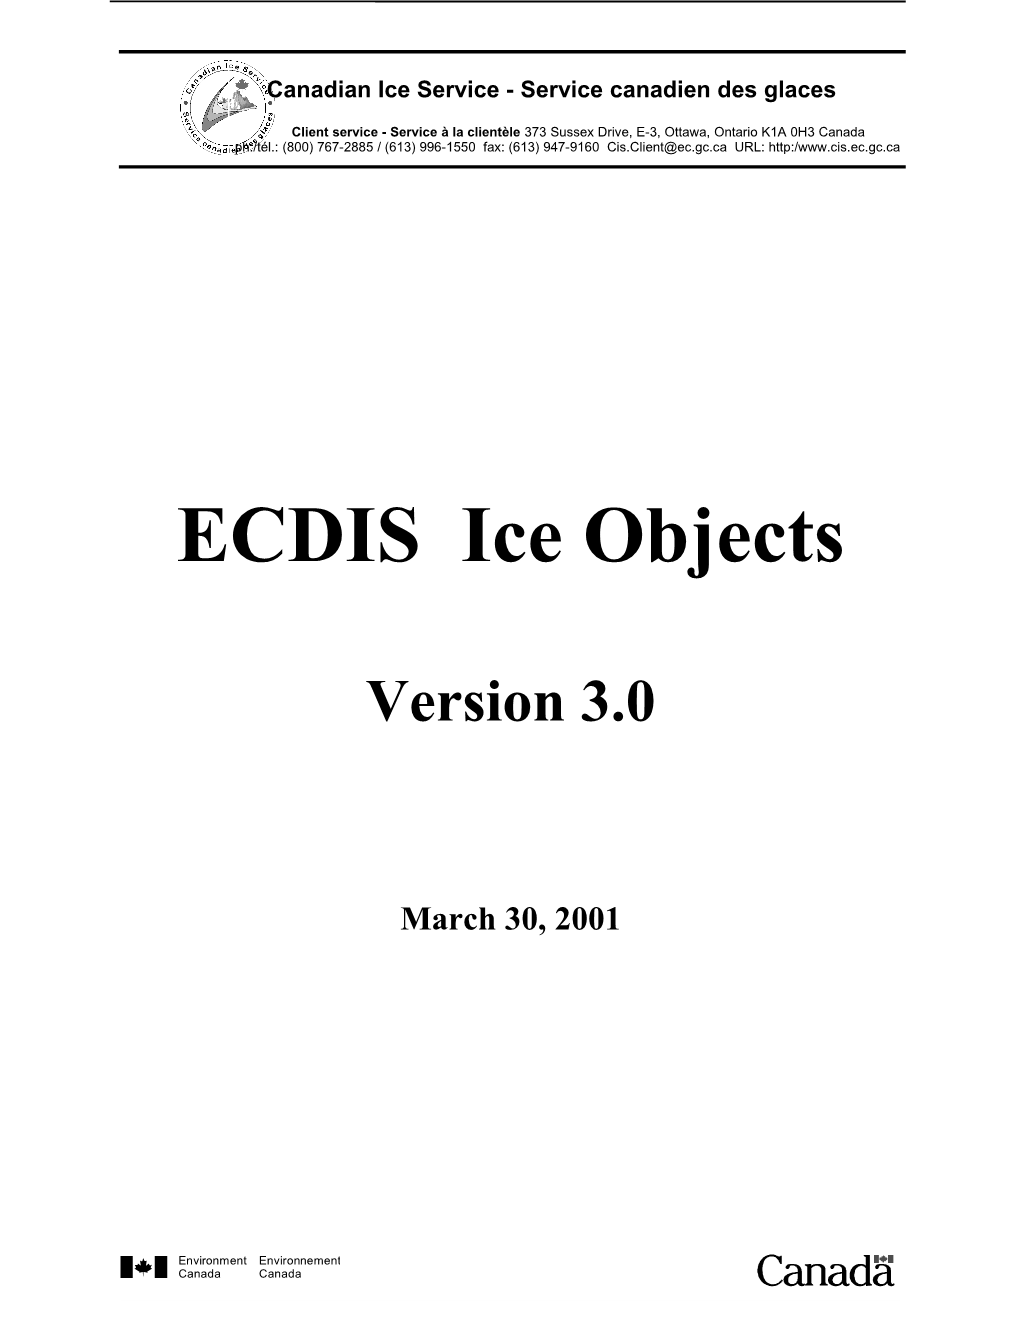 ECDIS Ice Objects